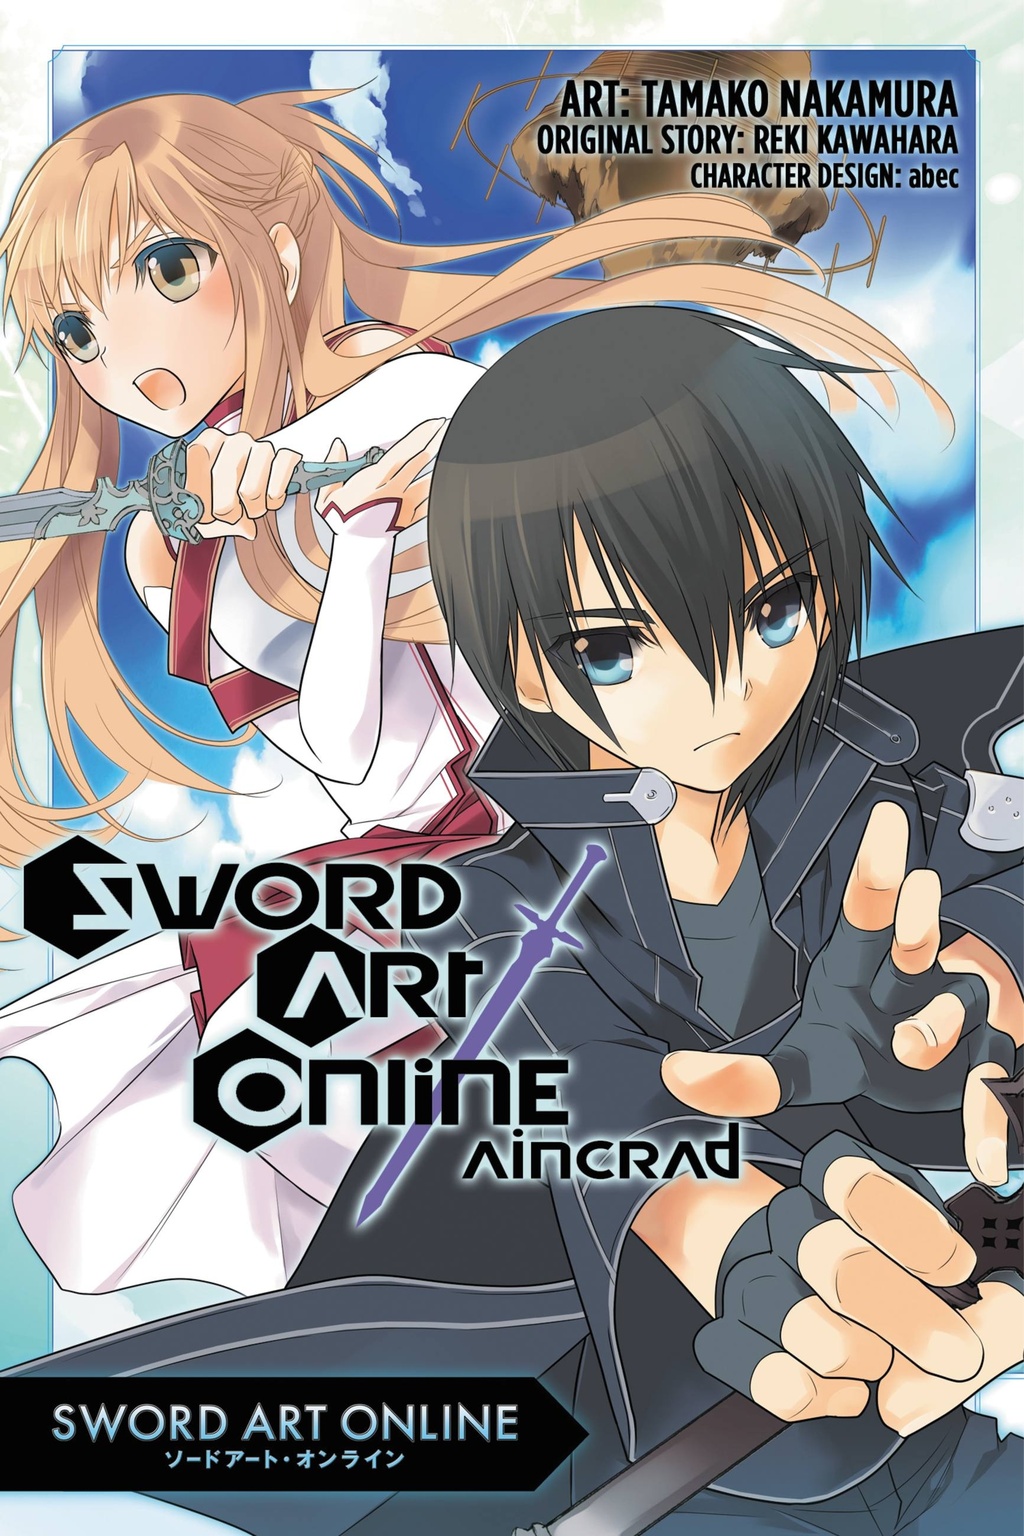 Manga - Sword Art Online : Aincrad, intégrale tomes 1 et 2 ...